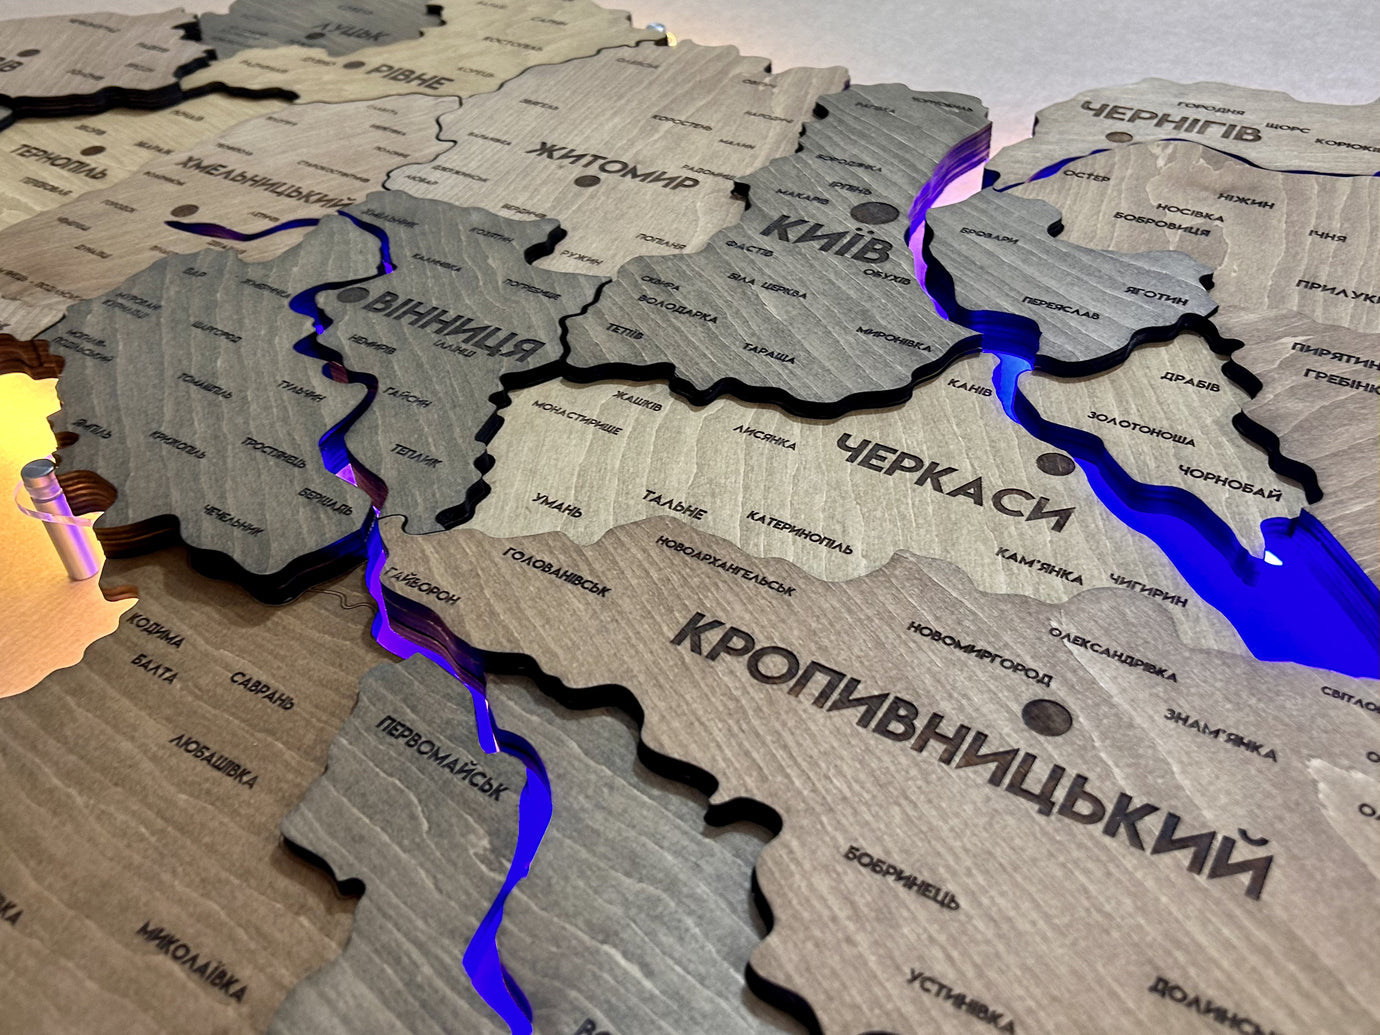 Multilayer Ukraine LED map with backlighting of rivers color Helsinki